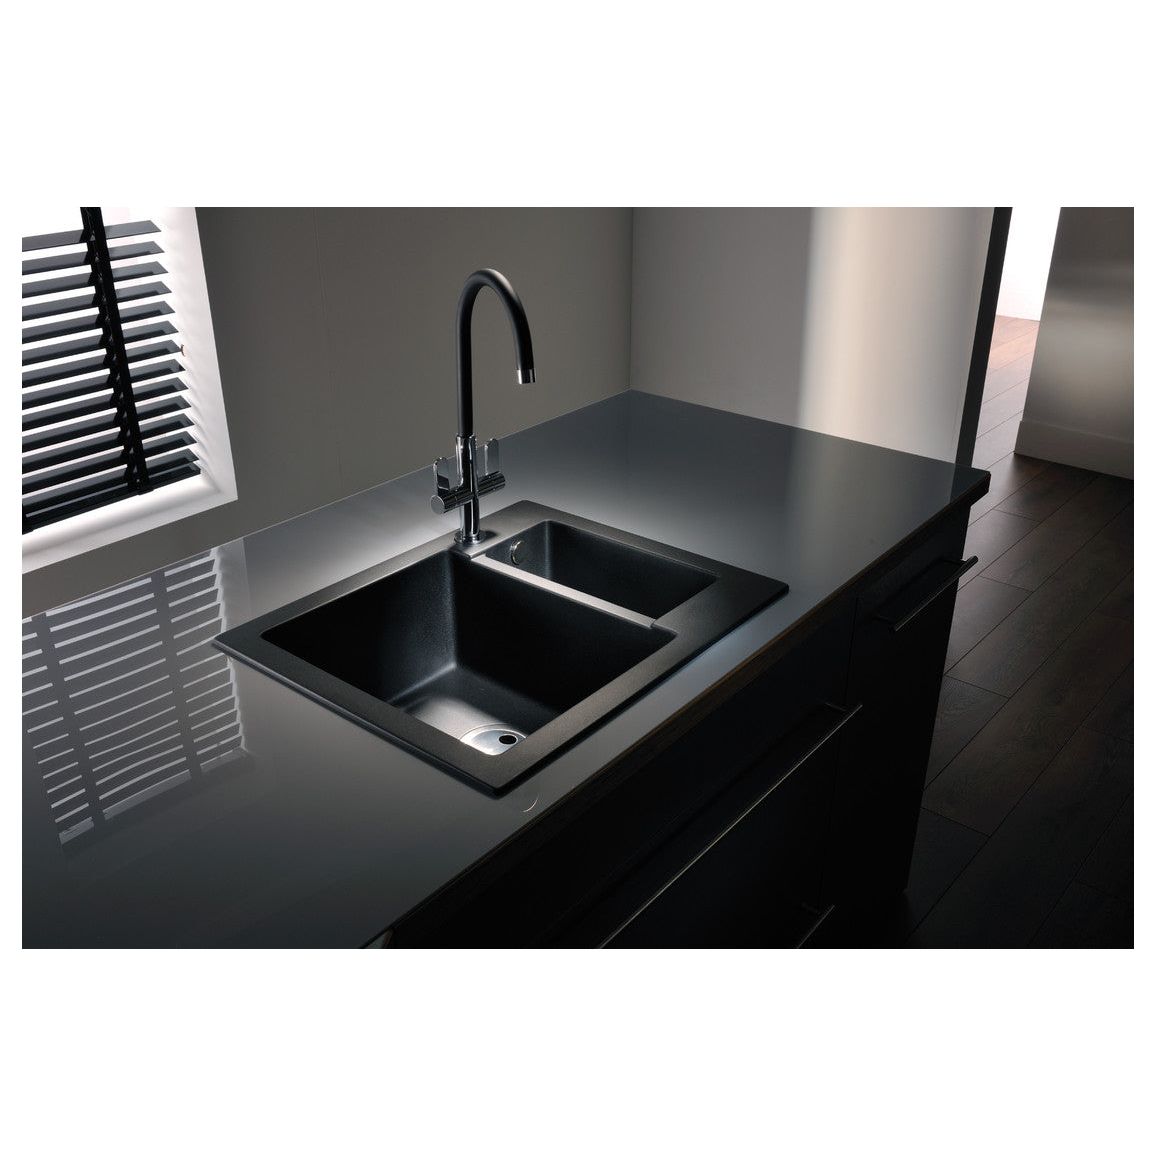 Abode Zero 1.5B Granite Inset Sink - Black Metallic